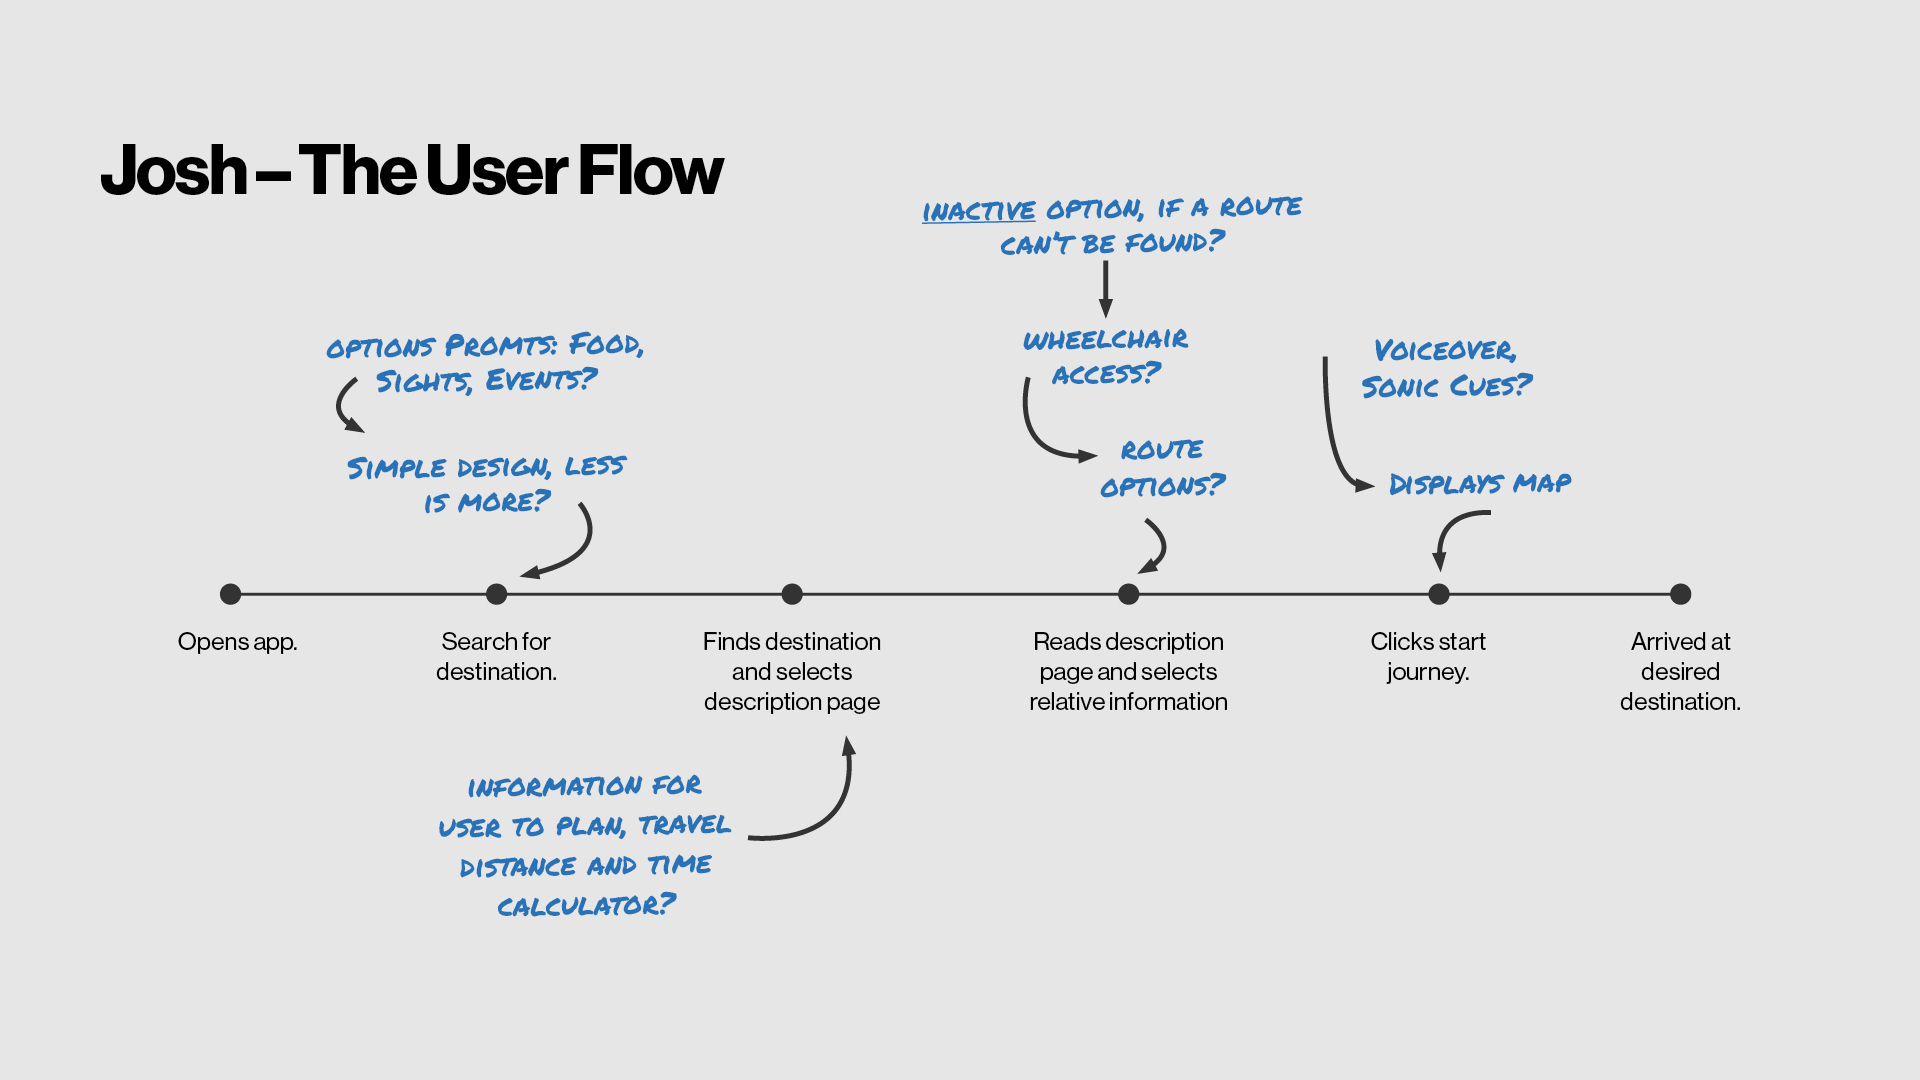 Josh – The User Flow